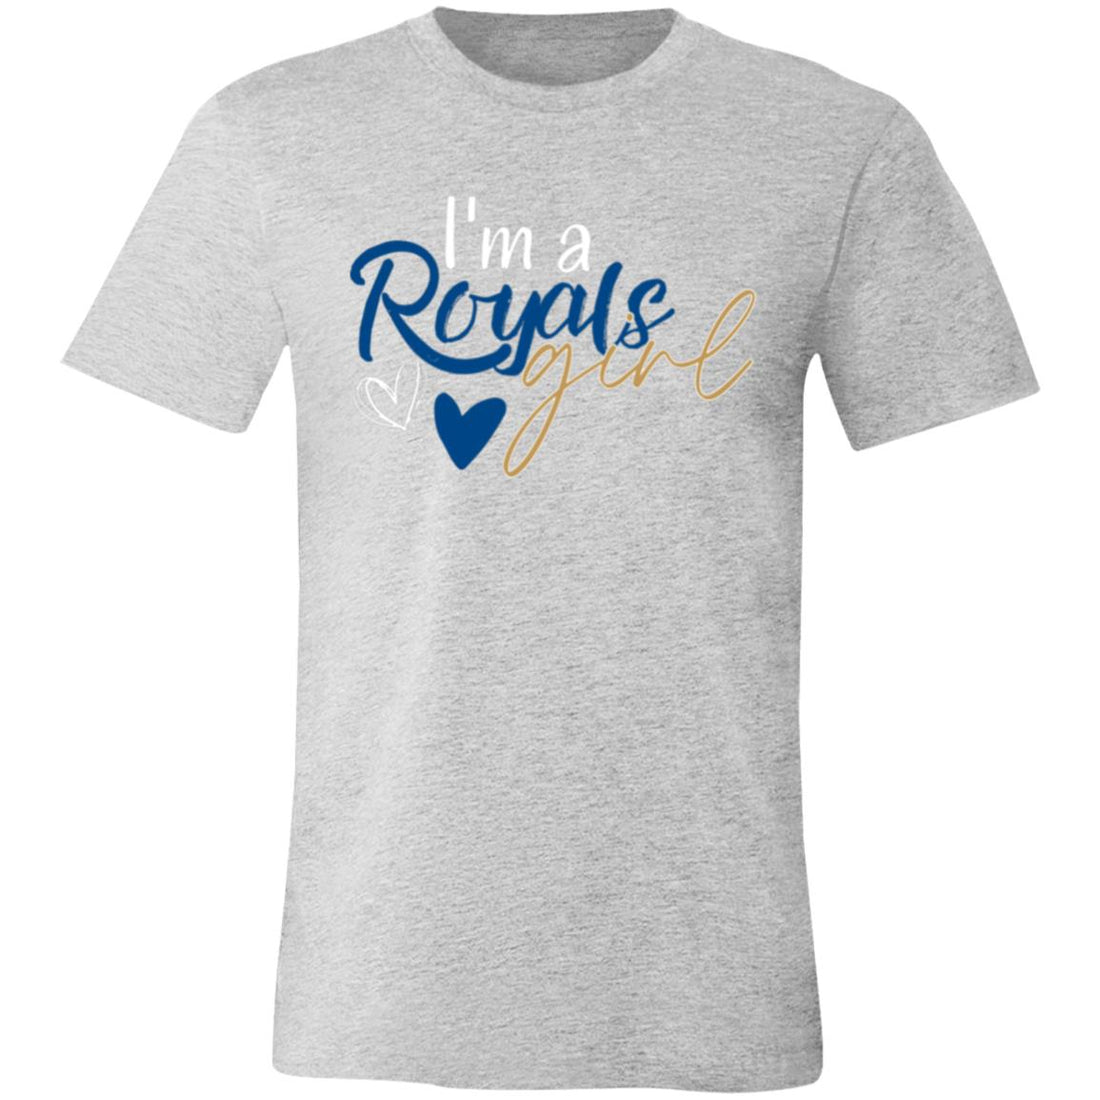 Royals Girl Short-Sleeve T-Shirt - T-Shirts - Positively Sassy - Royals Girl Short-Sleeve T-Shirt